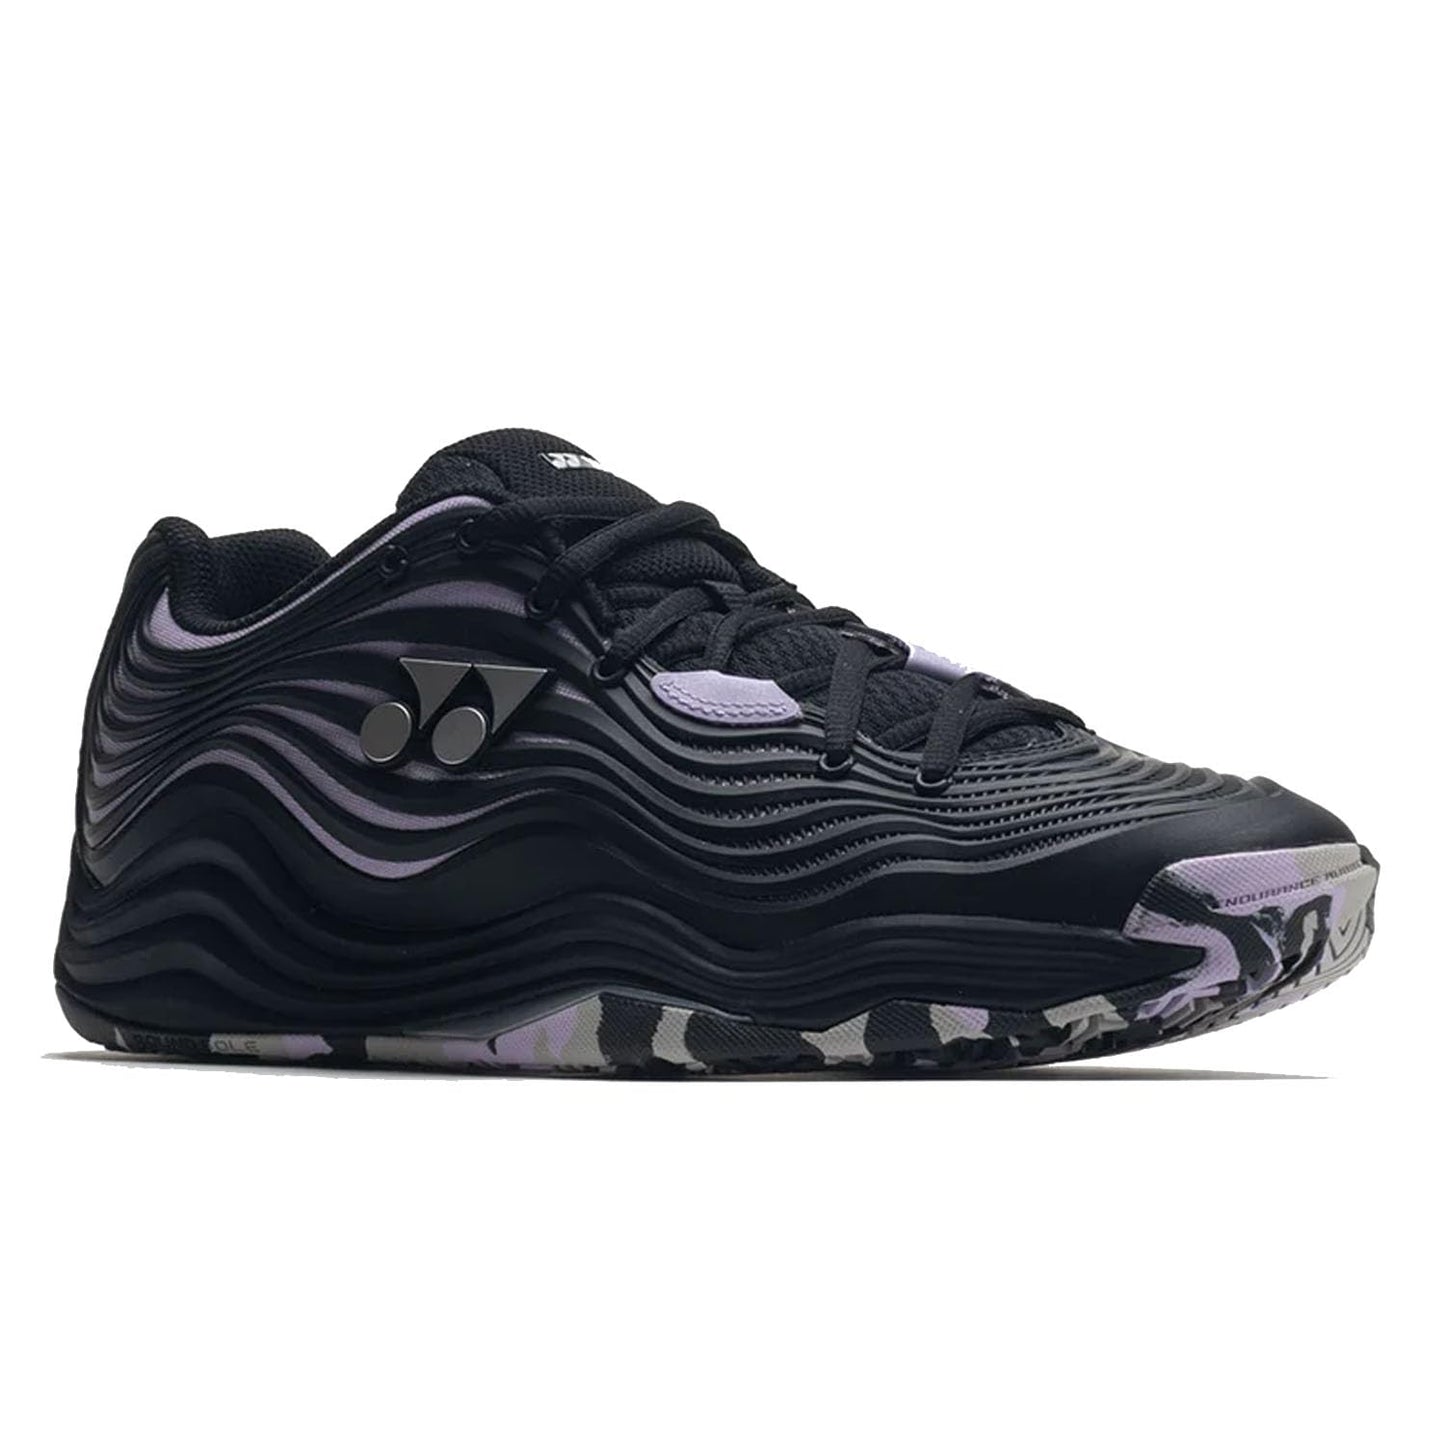 Yonex Power Cushion Fusionrev Men's 5 Tennis Shoe, Black/Purple